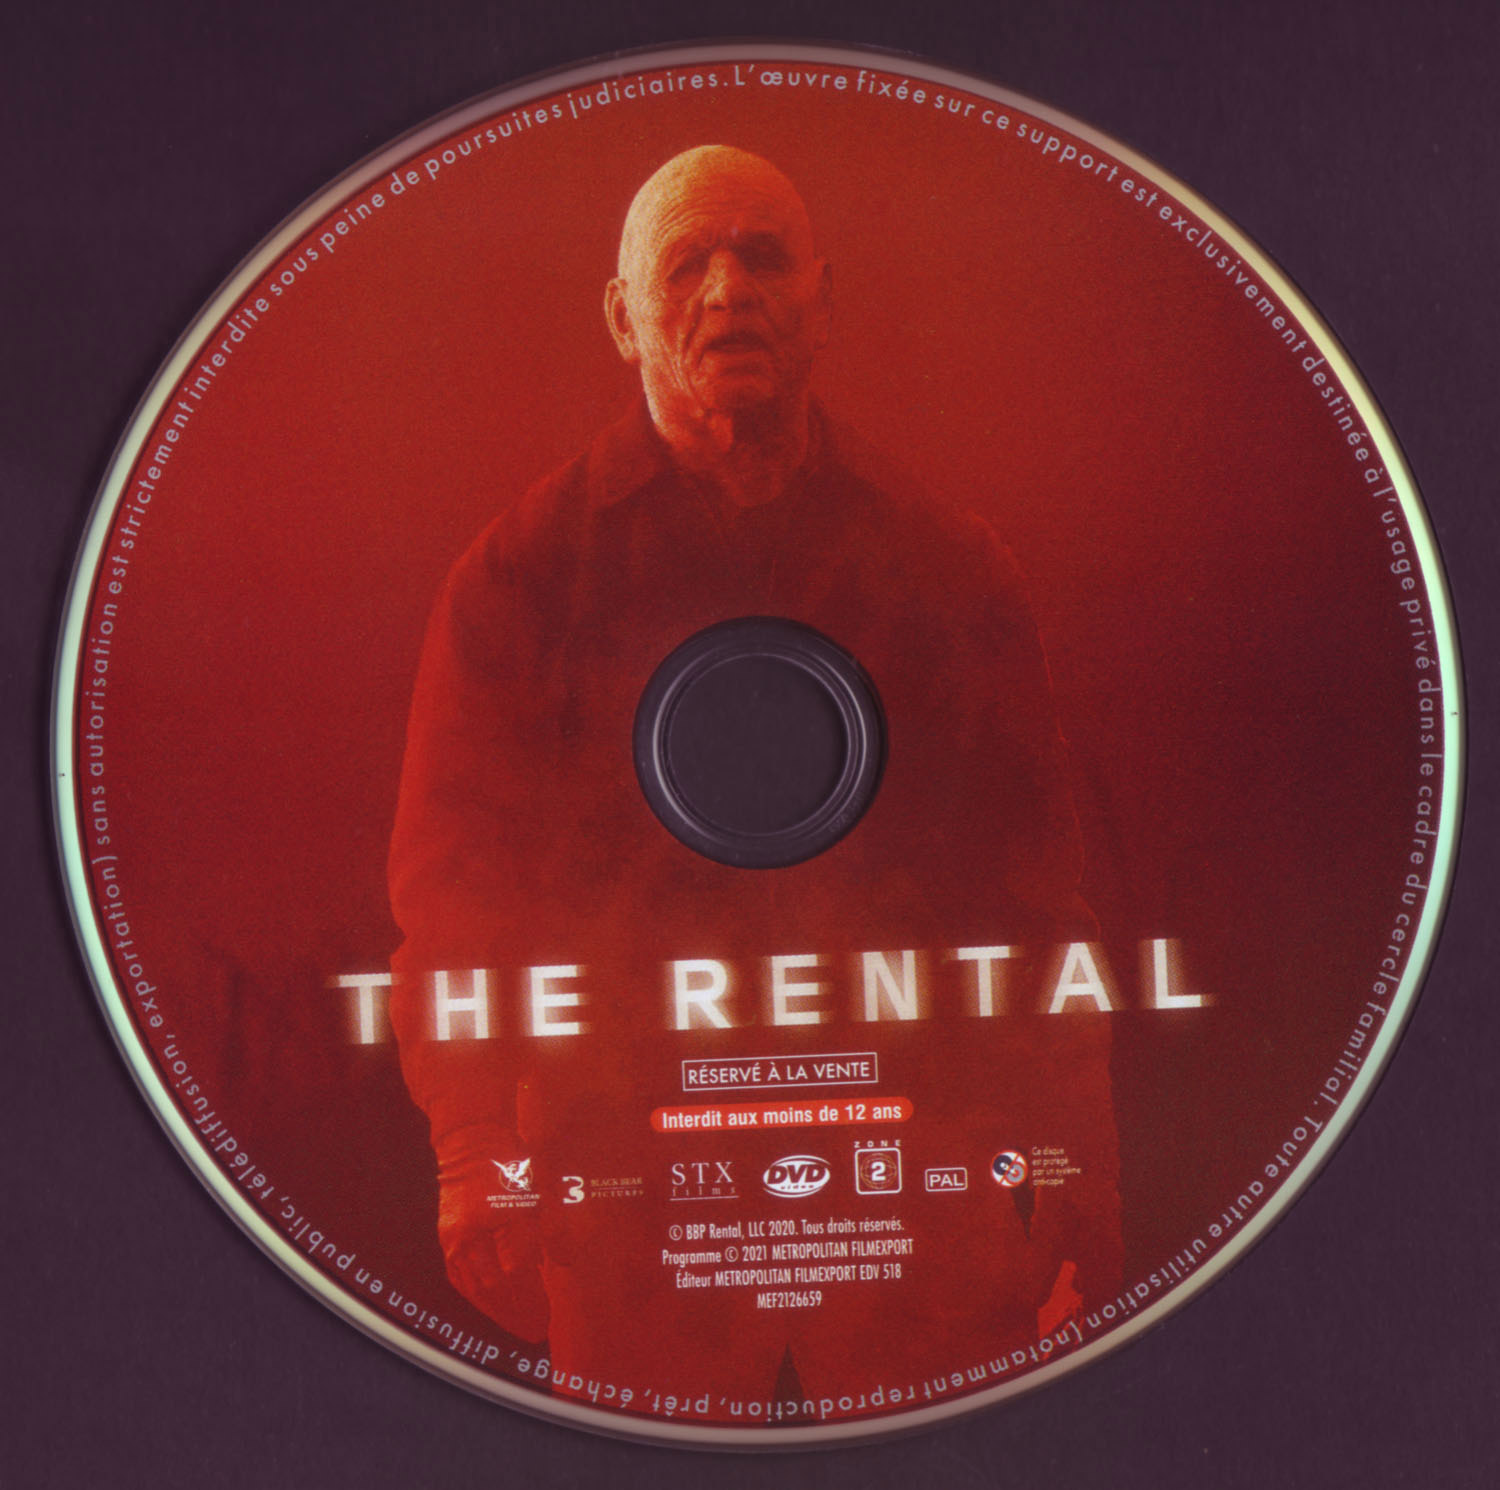 The rental